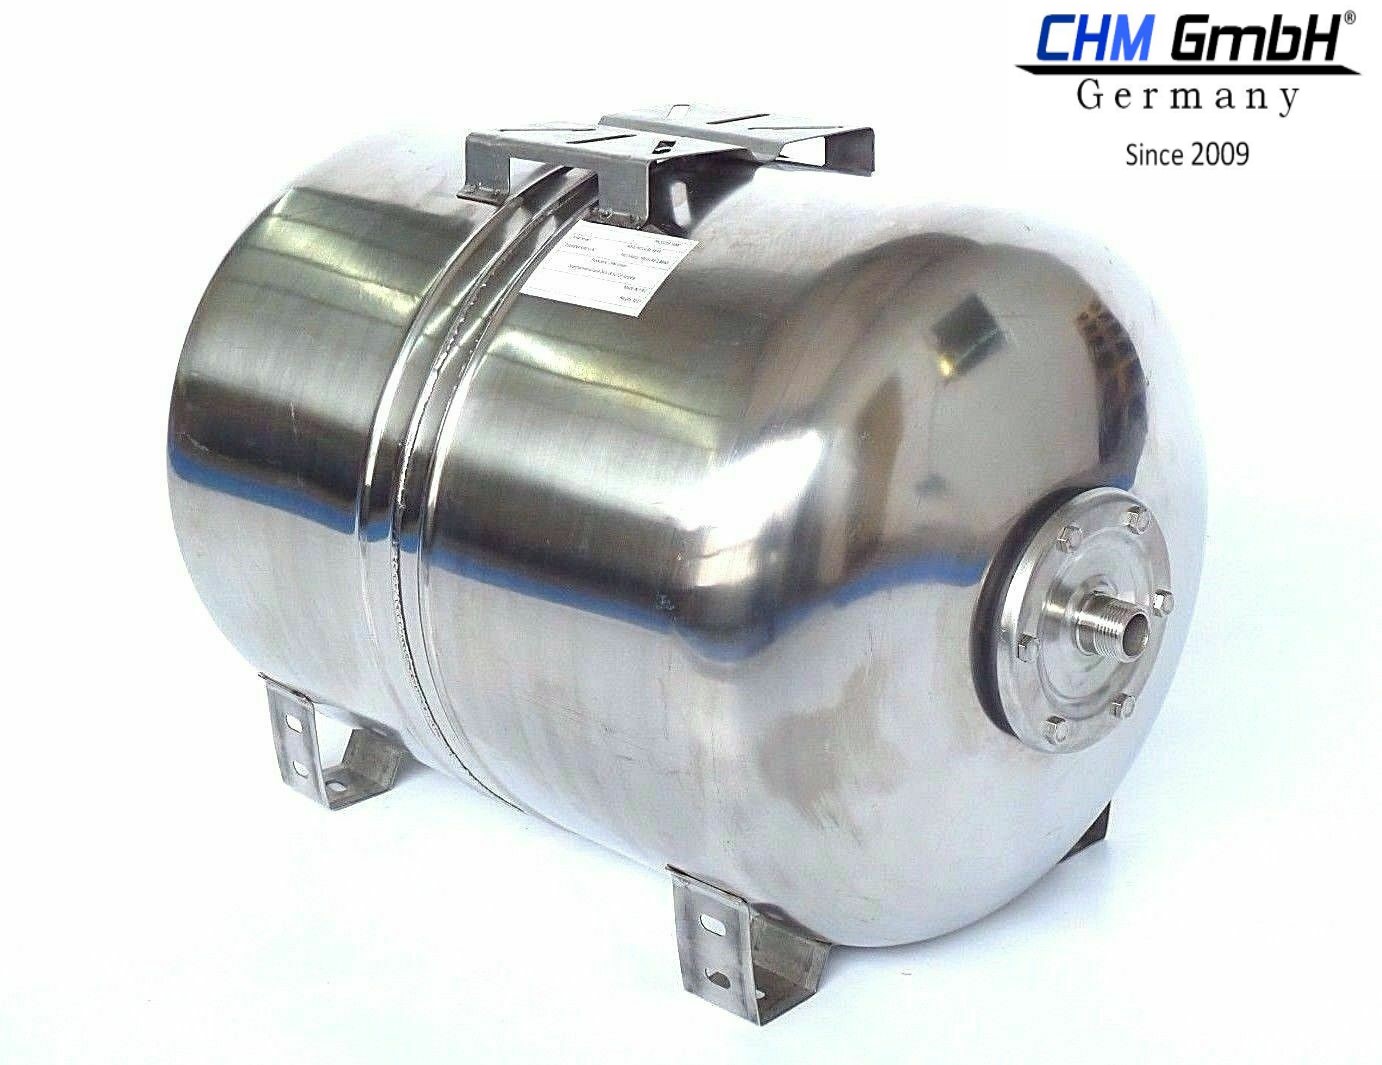 CHM GmbH® 80 Liter Edelstahl Membrankessel Druckkessel m EPDM Blase 8 Bar Druck 